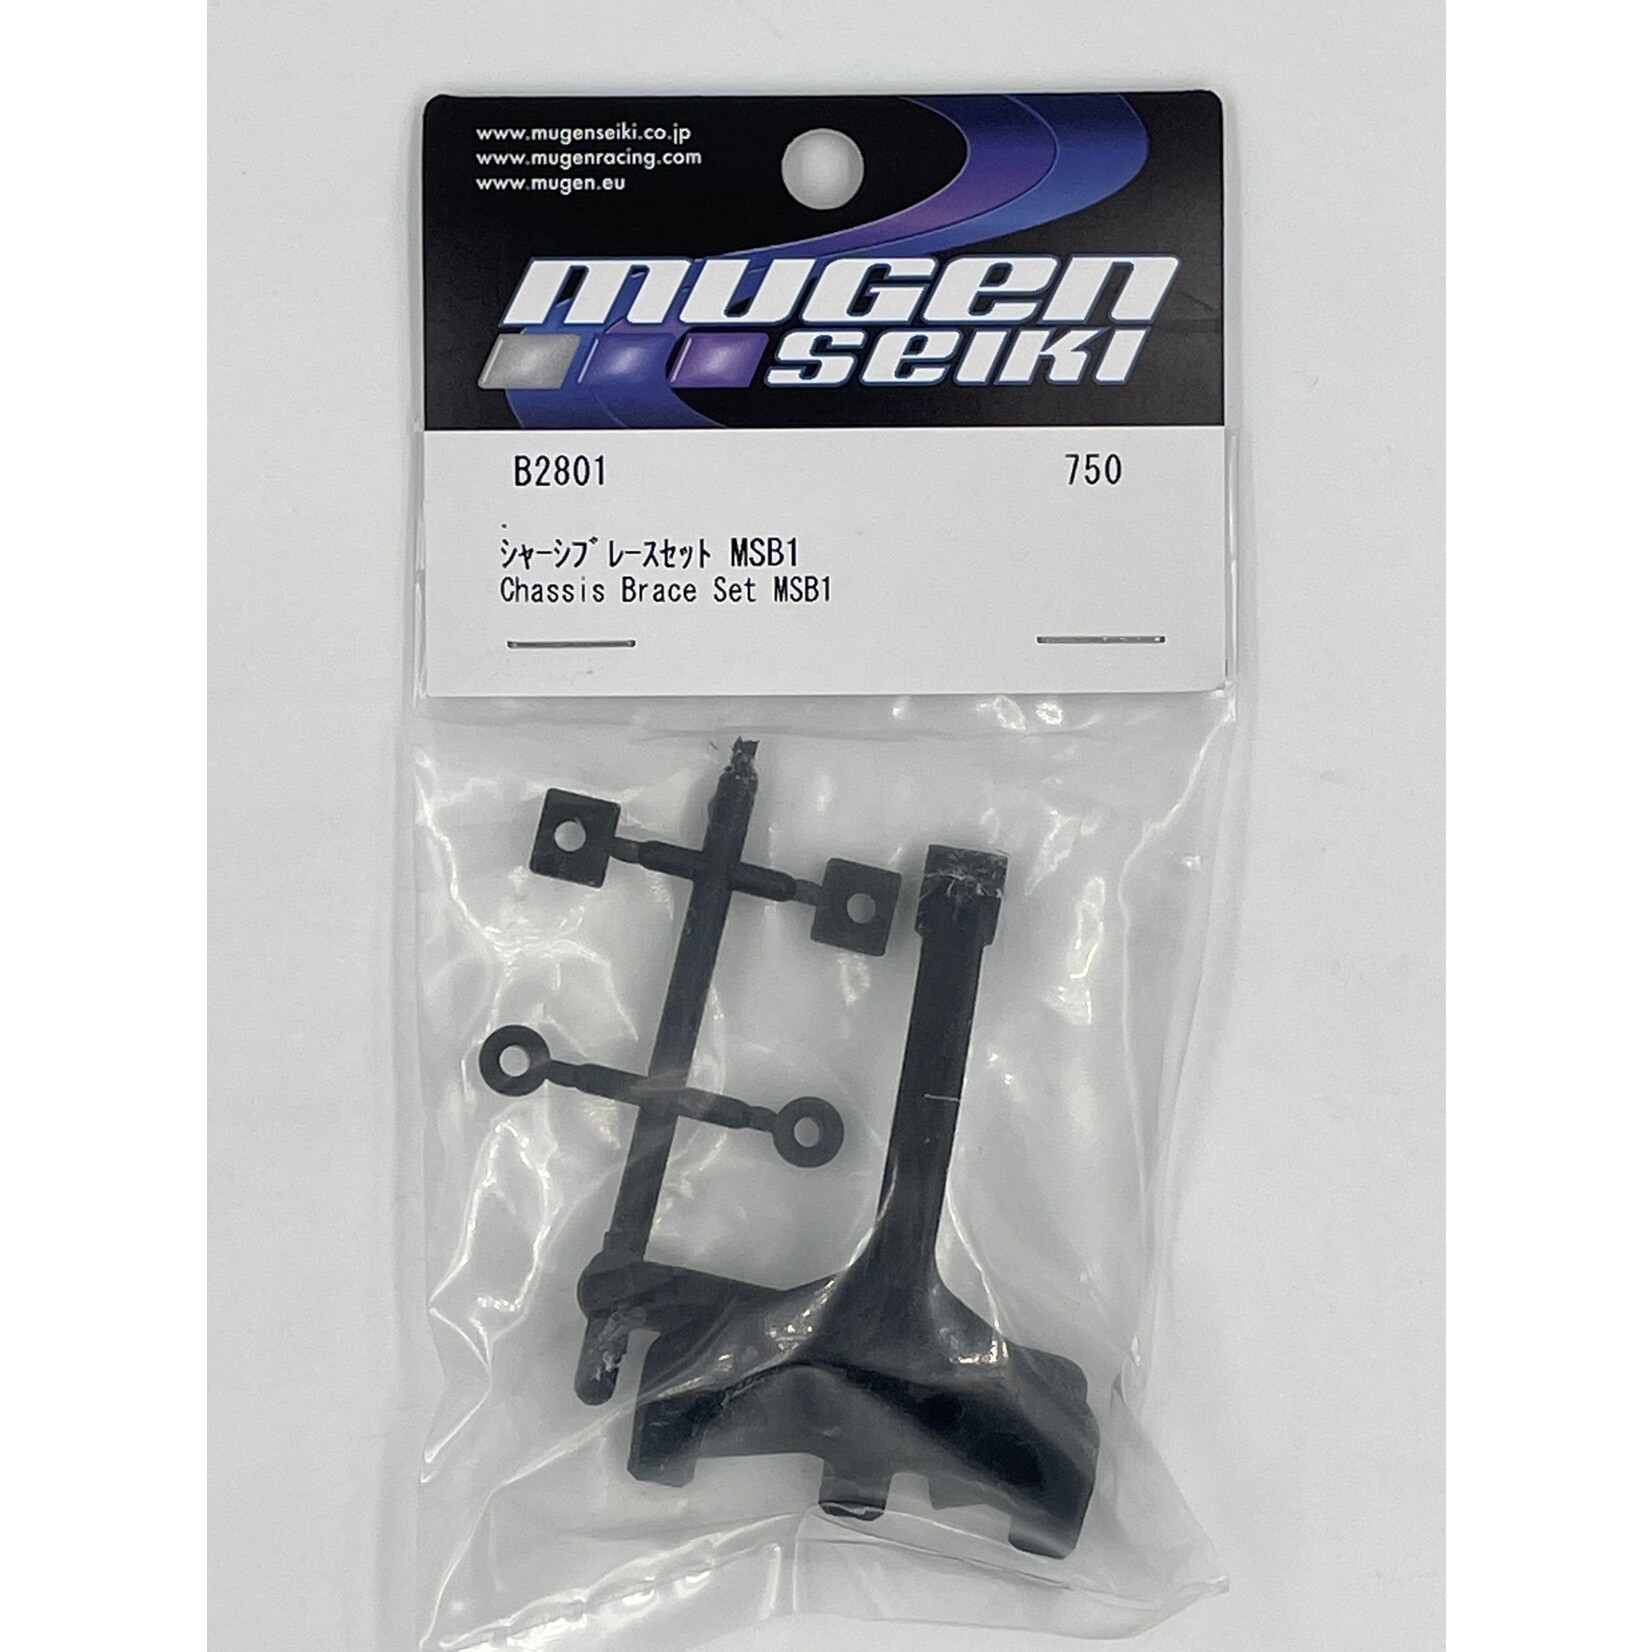 Mugen B2801 Mugen Chassis Brace Set: MSB1